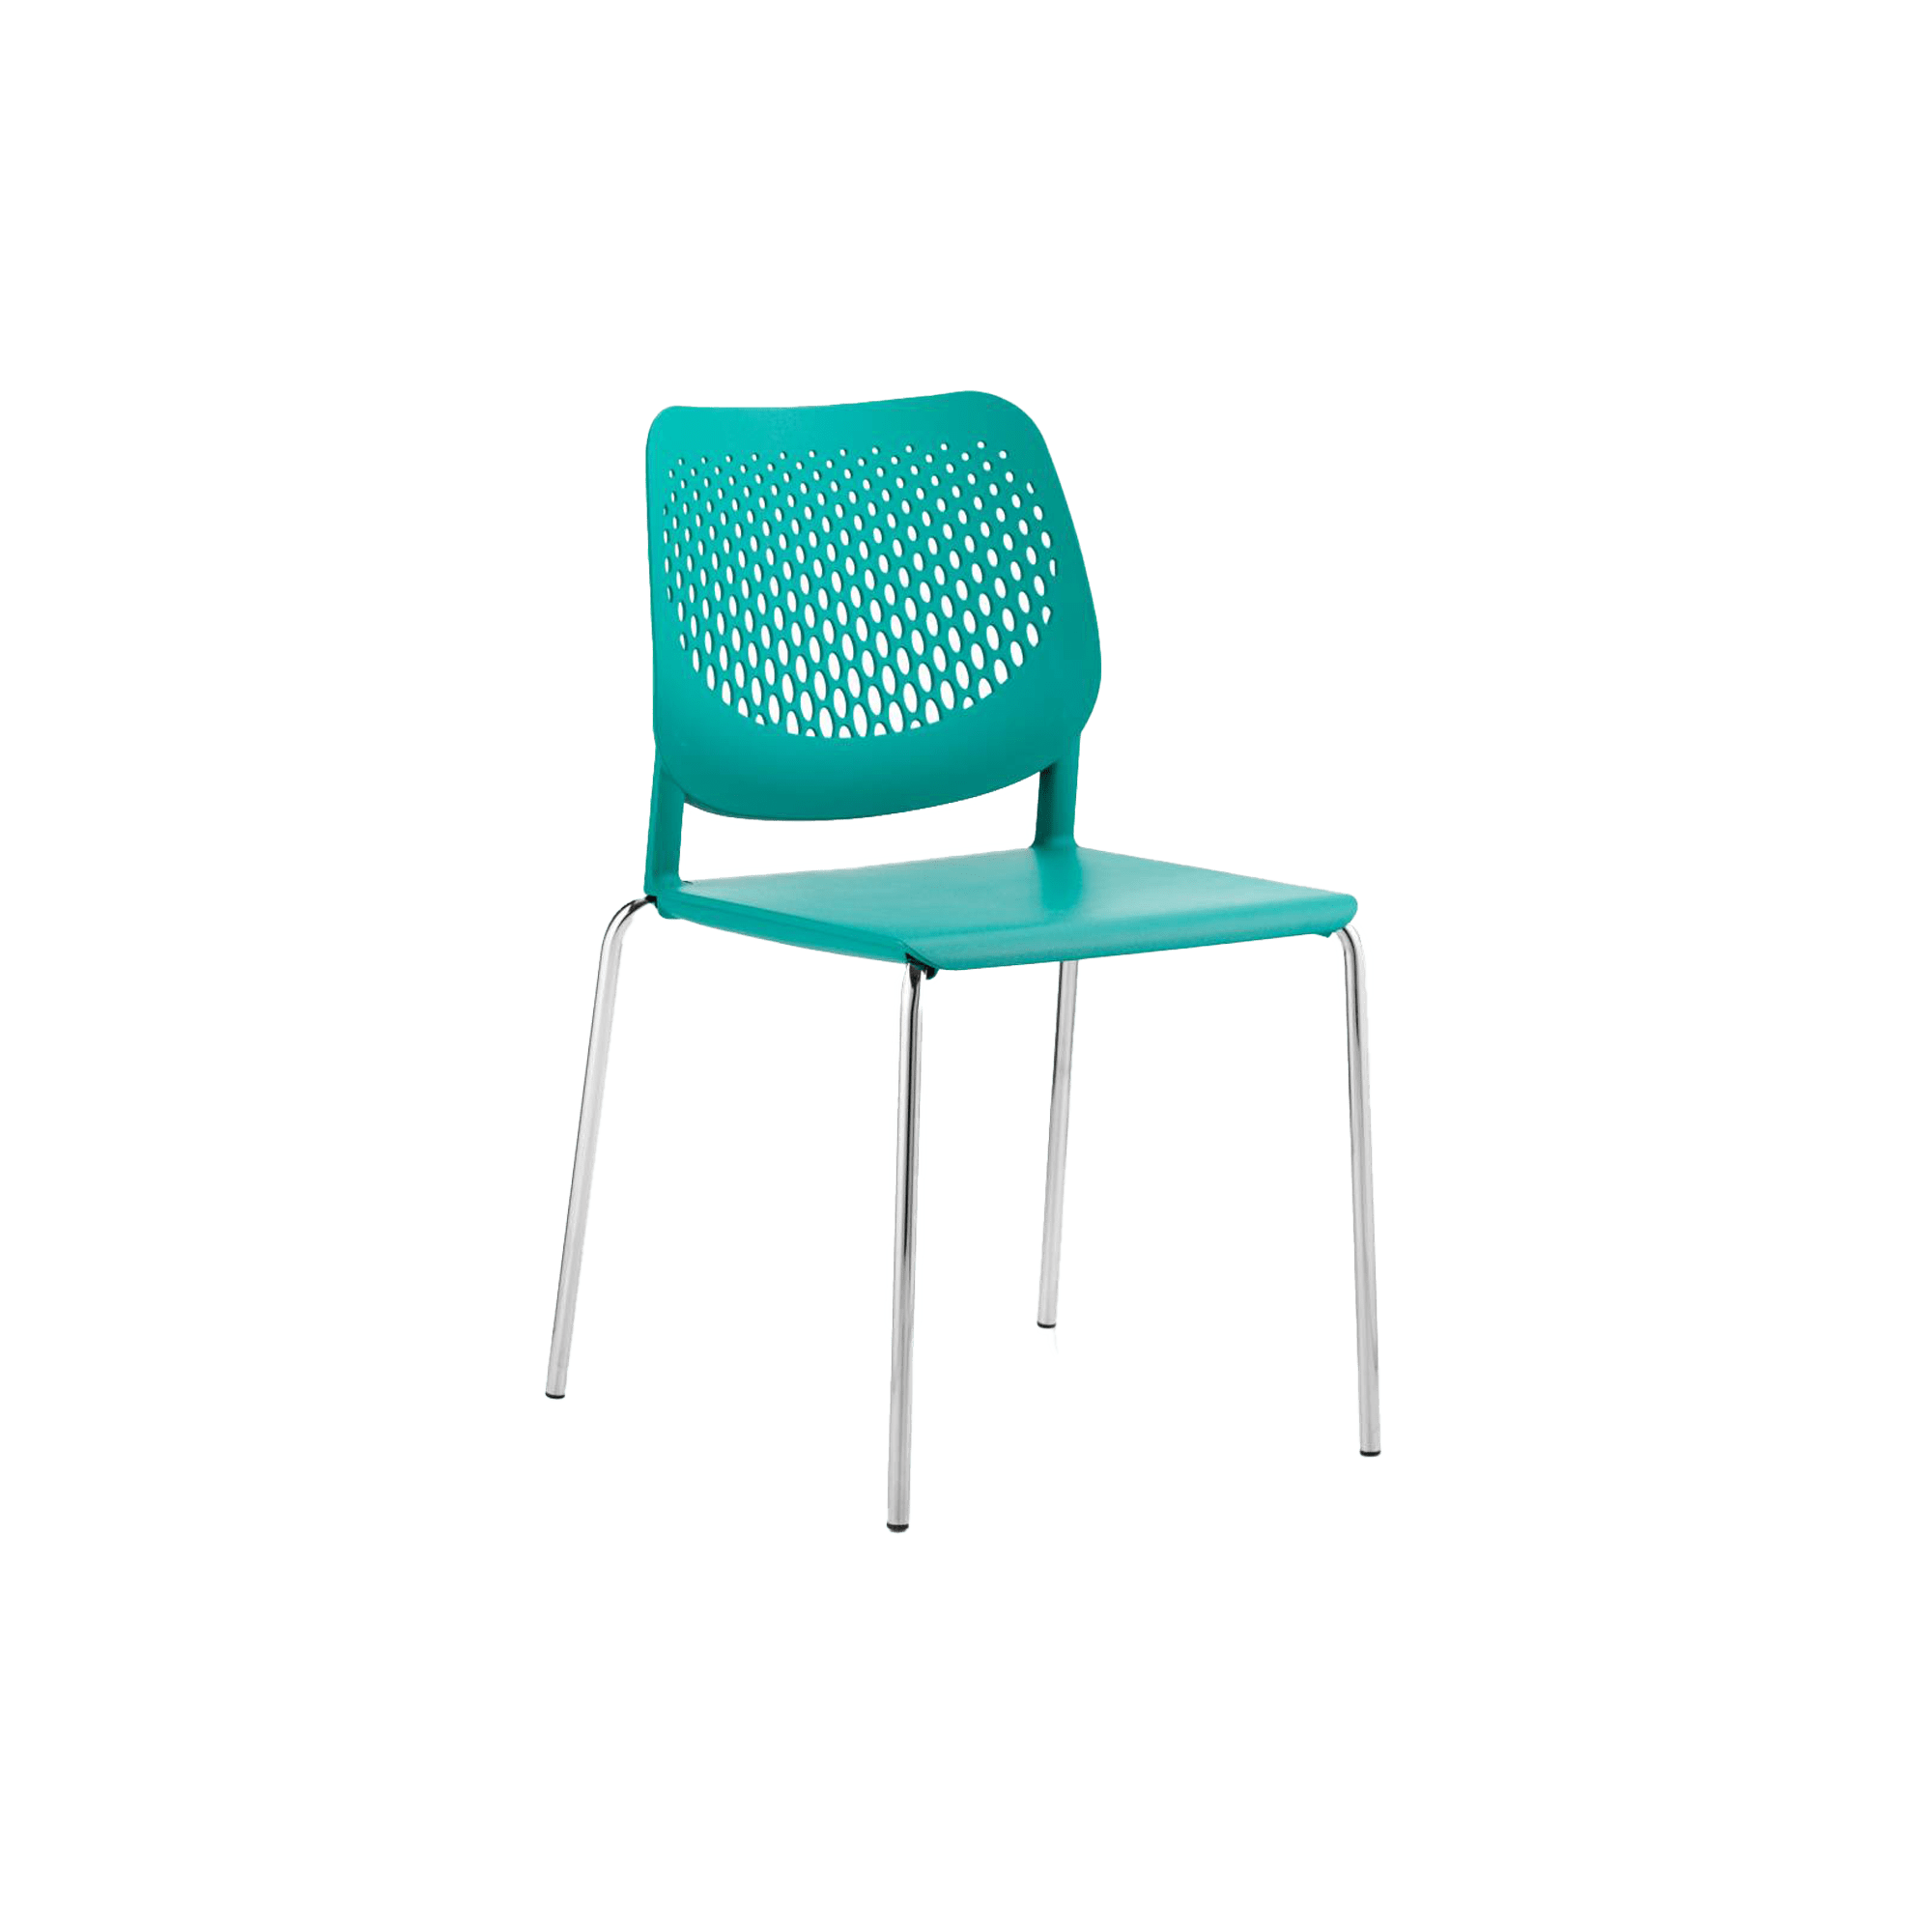 A teal plastic chair